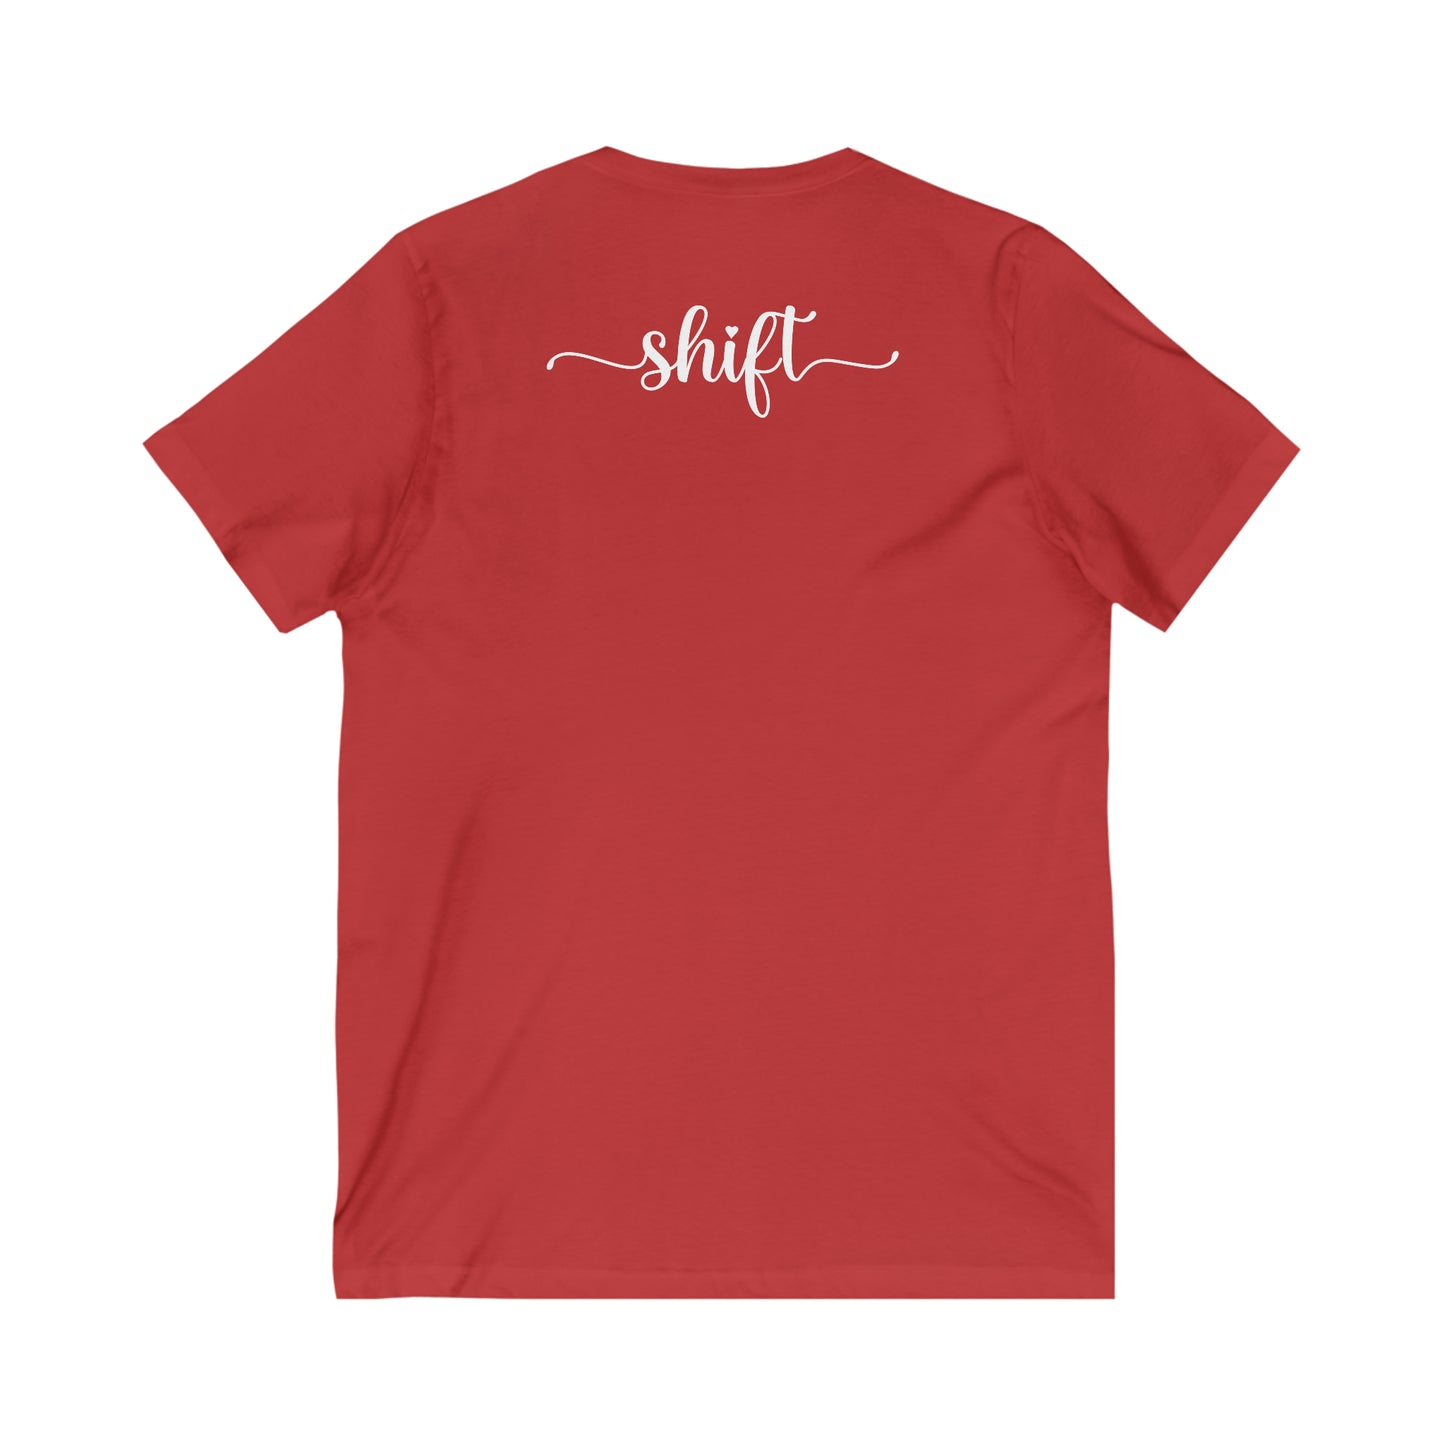 Shift Unisex Jersey Short Sleeve V-Neck Tee